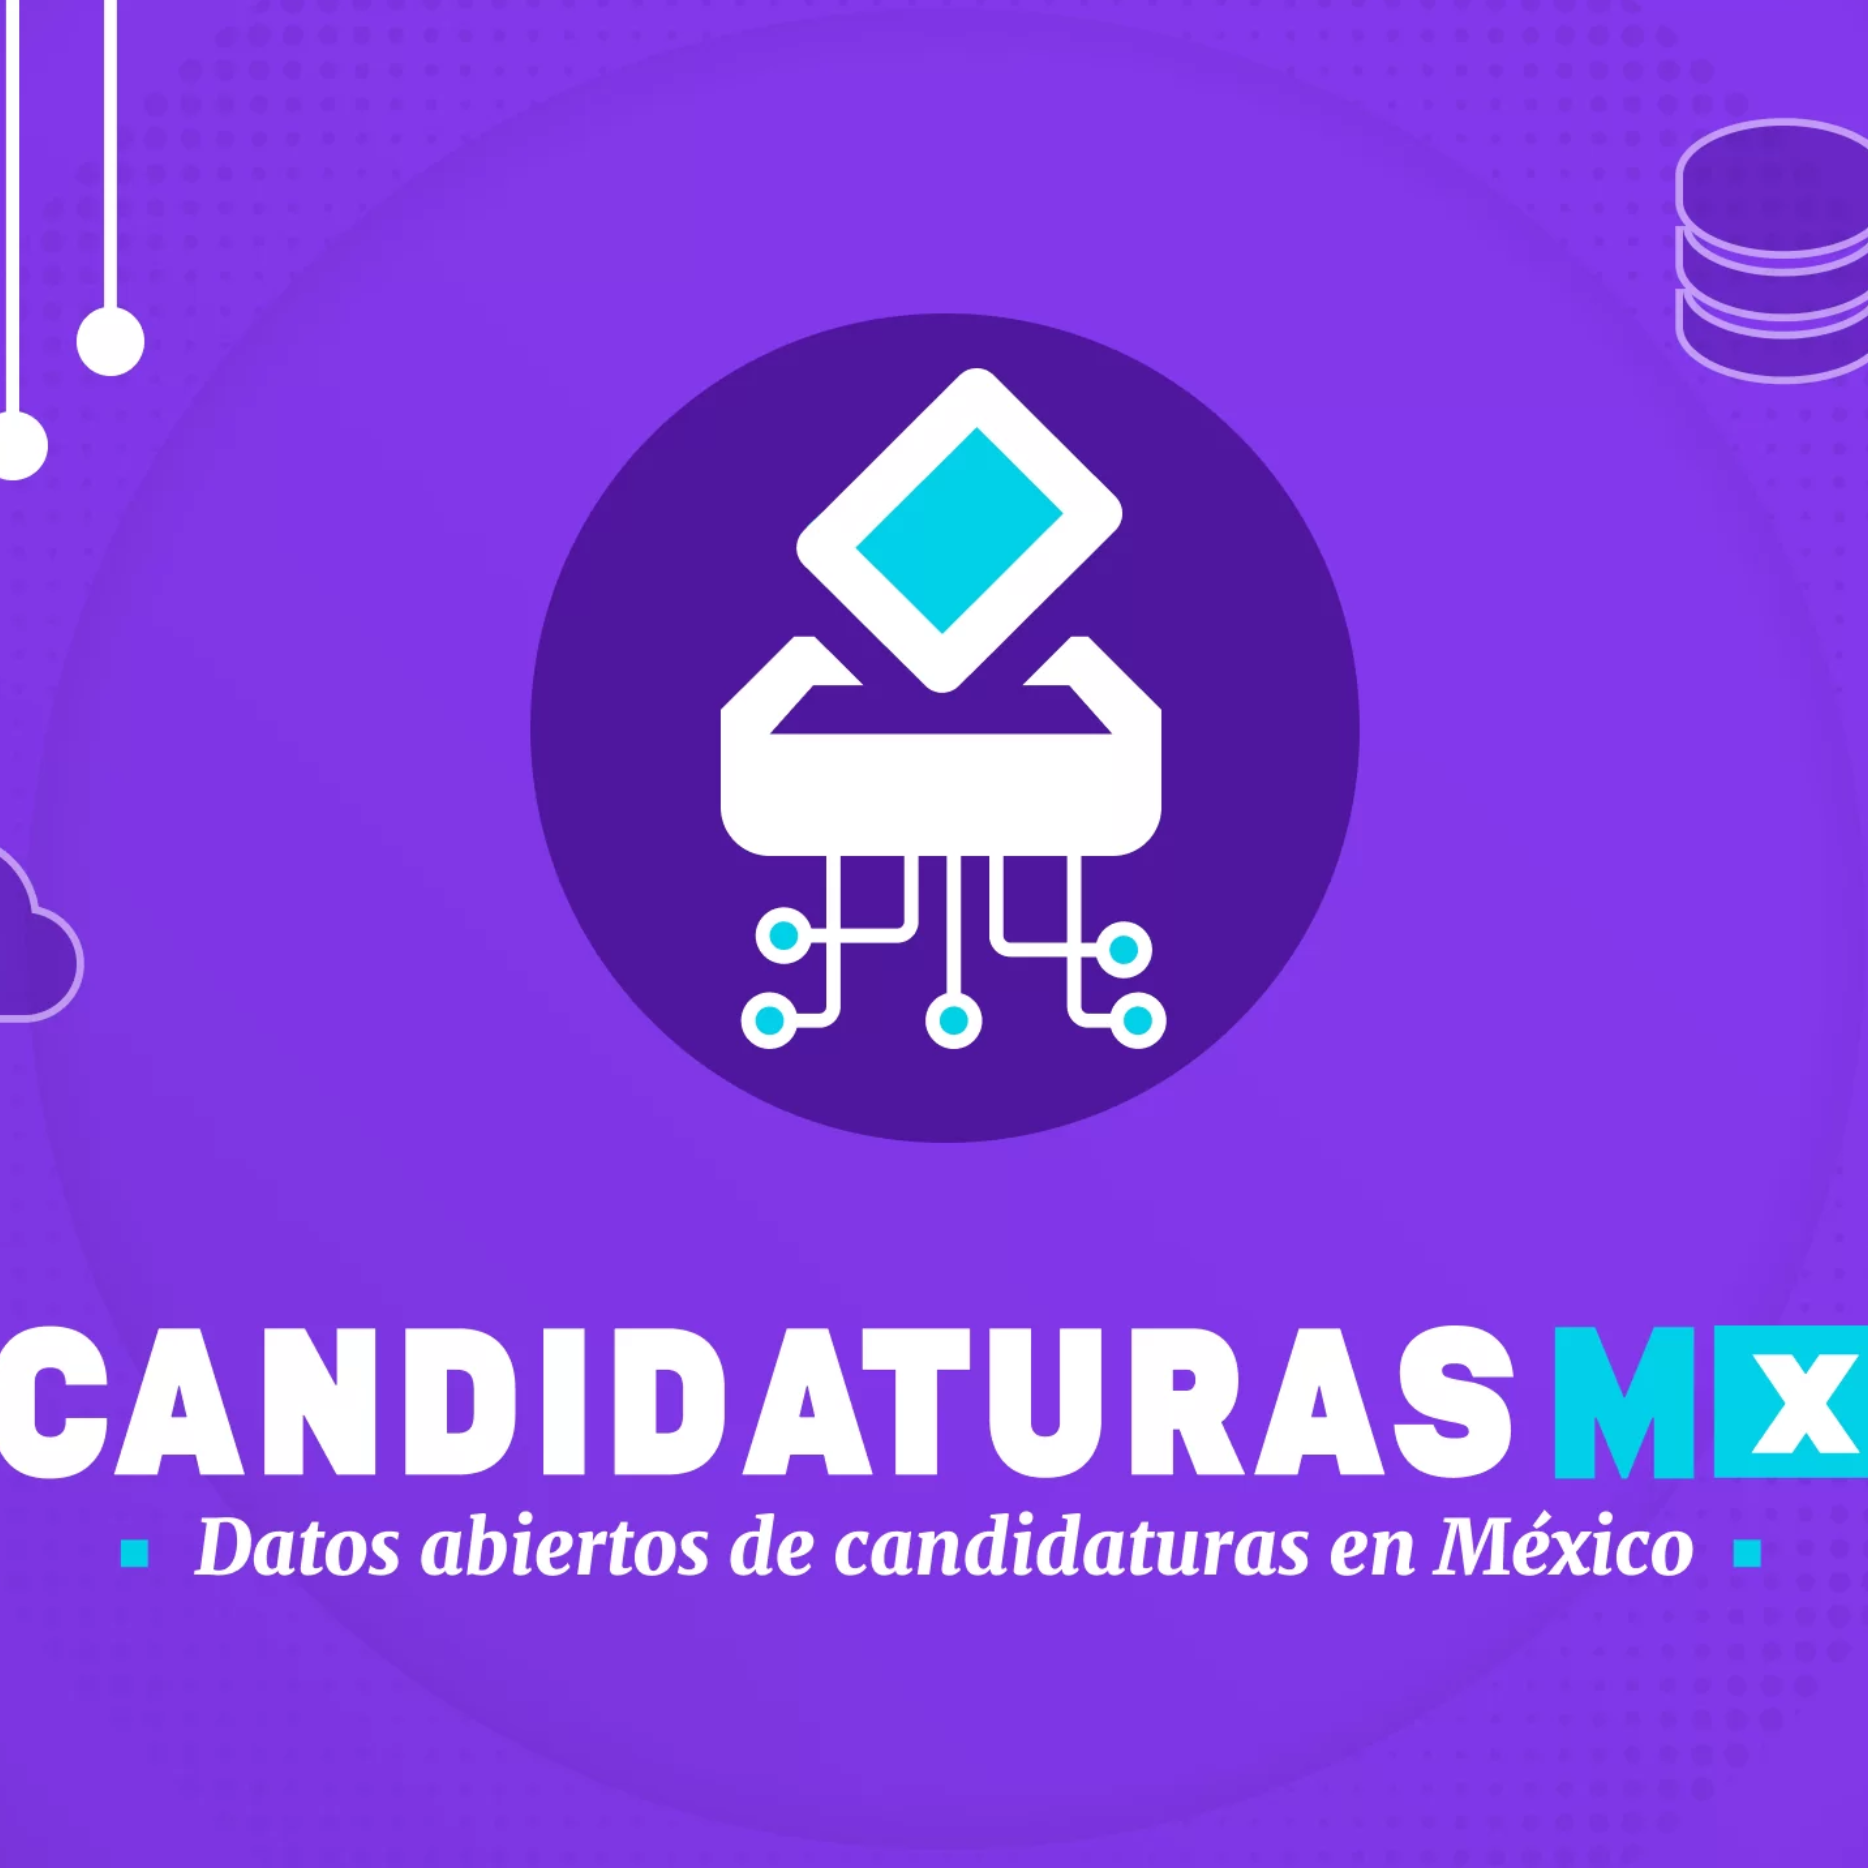 Candidaturas.mx